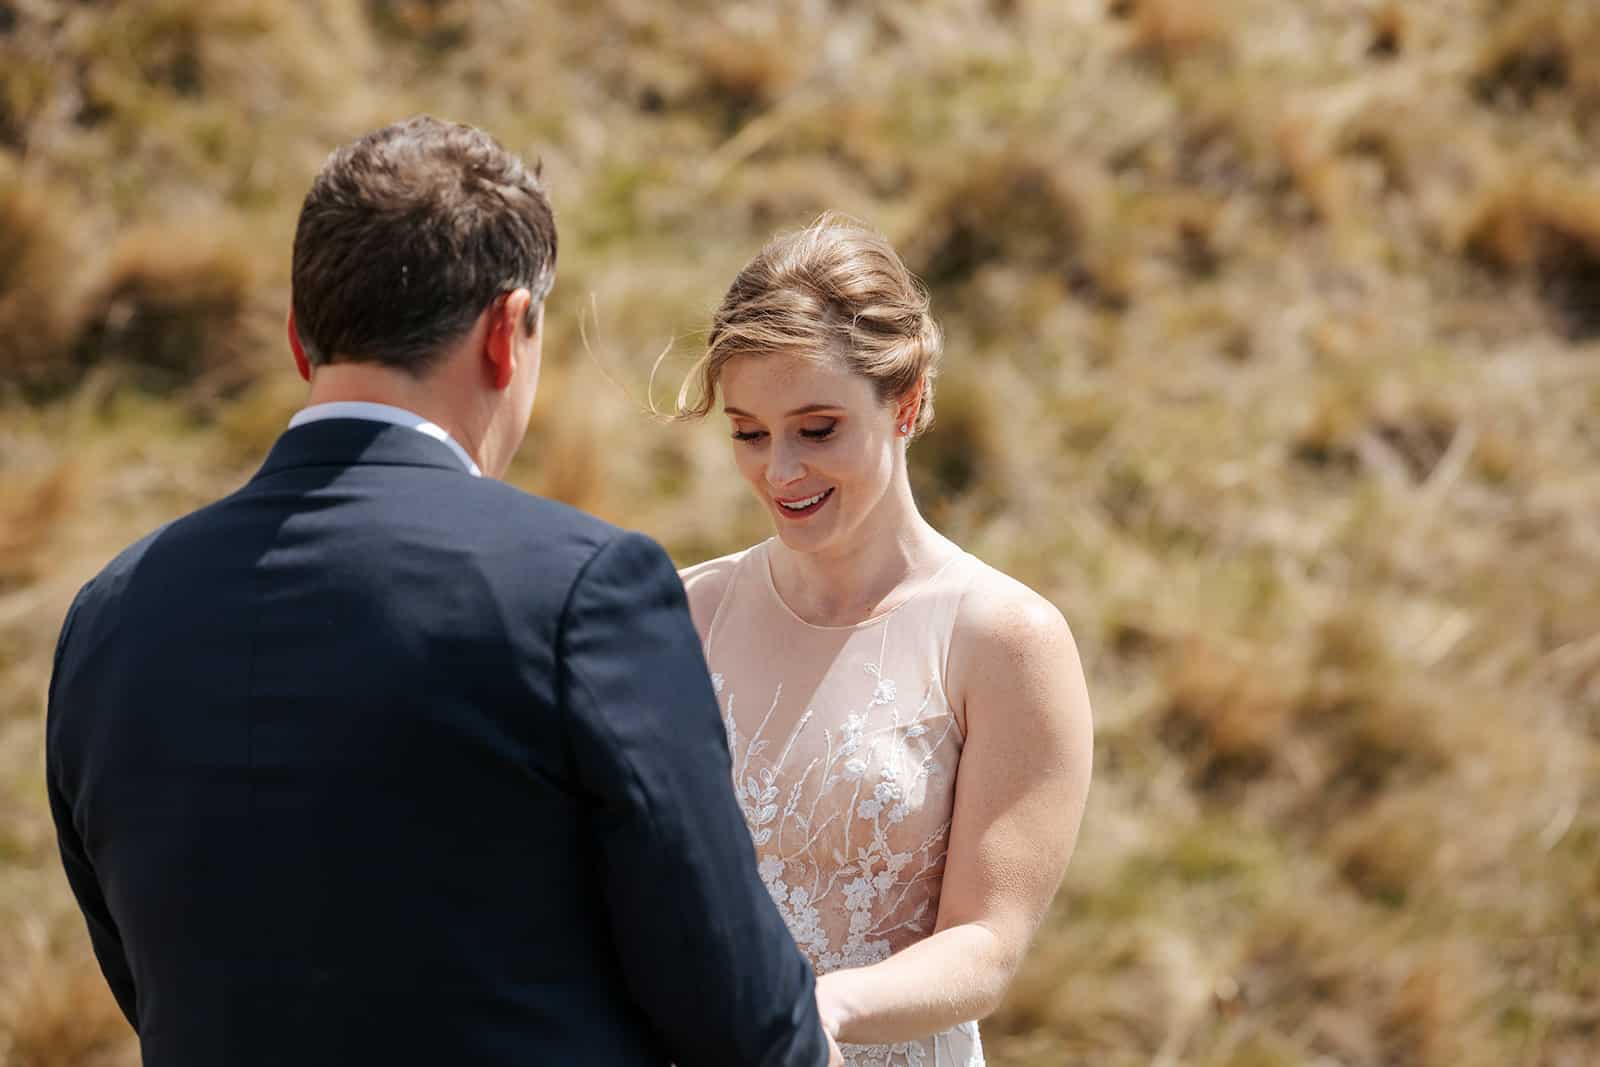 Coromandel Peak Heli Wedding in New Zealand